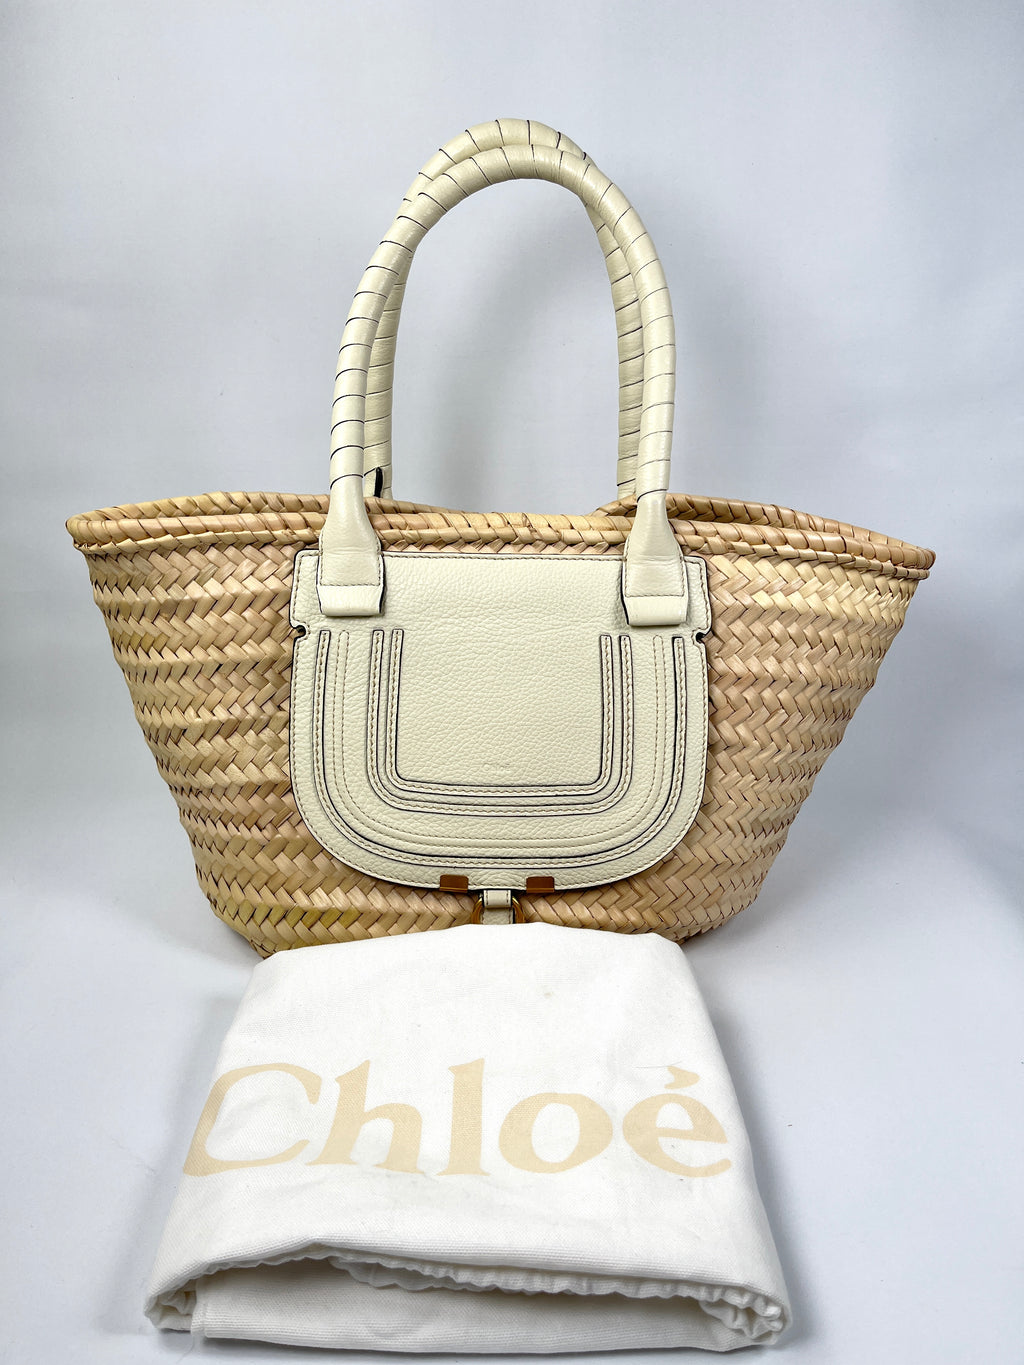 CHLOE - MARCIE MEDIUM BASKET BAG IN NATURAL WHITE